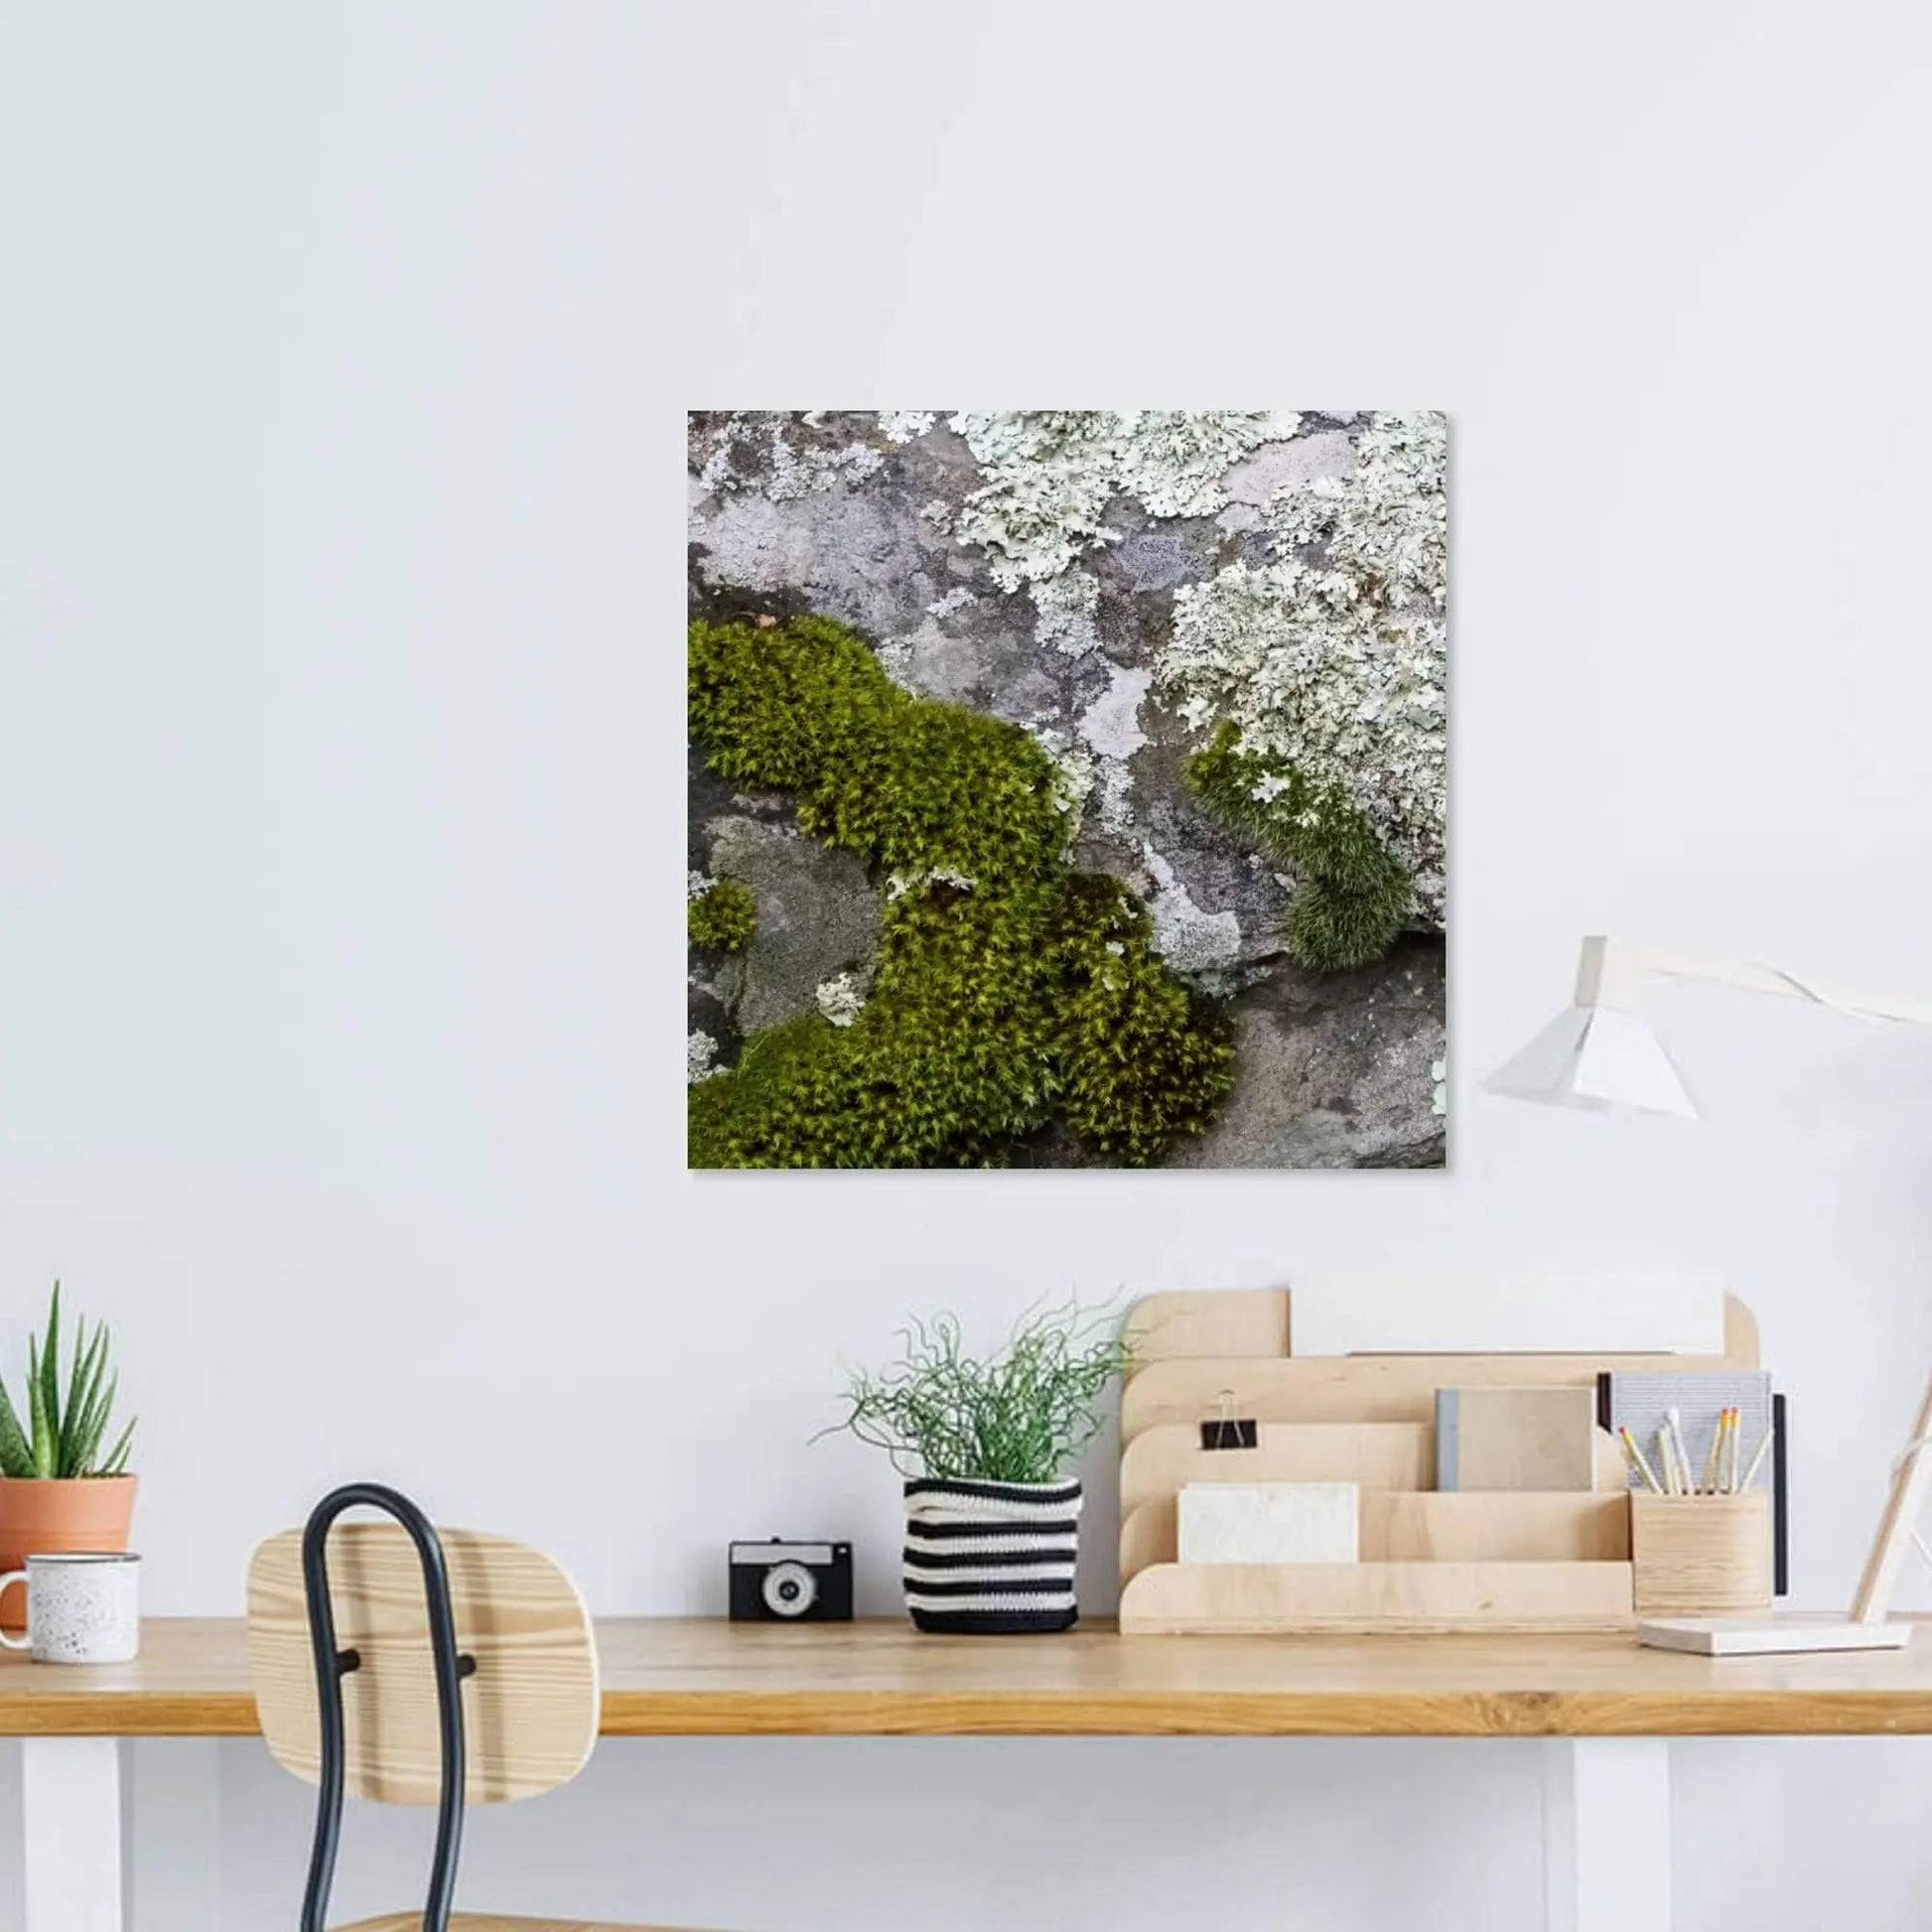 Office wall display of Keystone lichen art